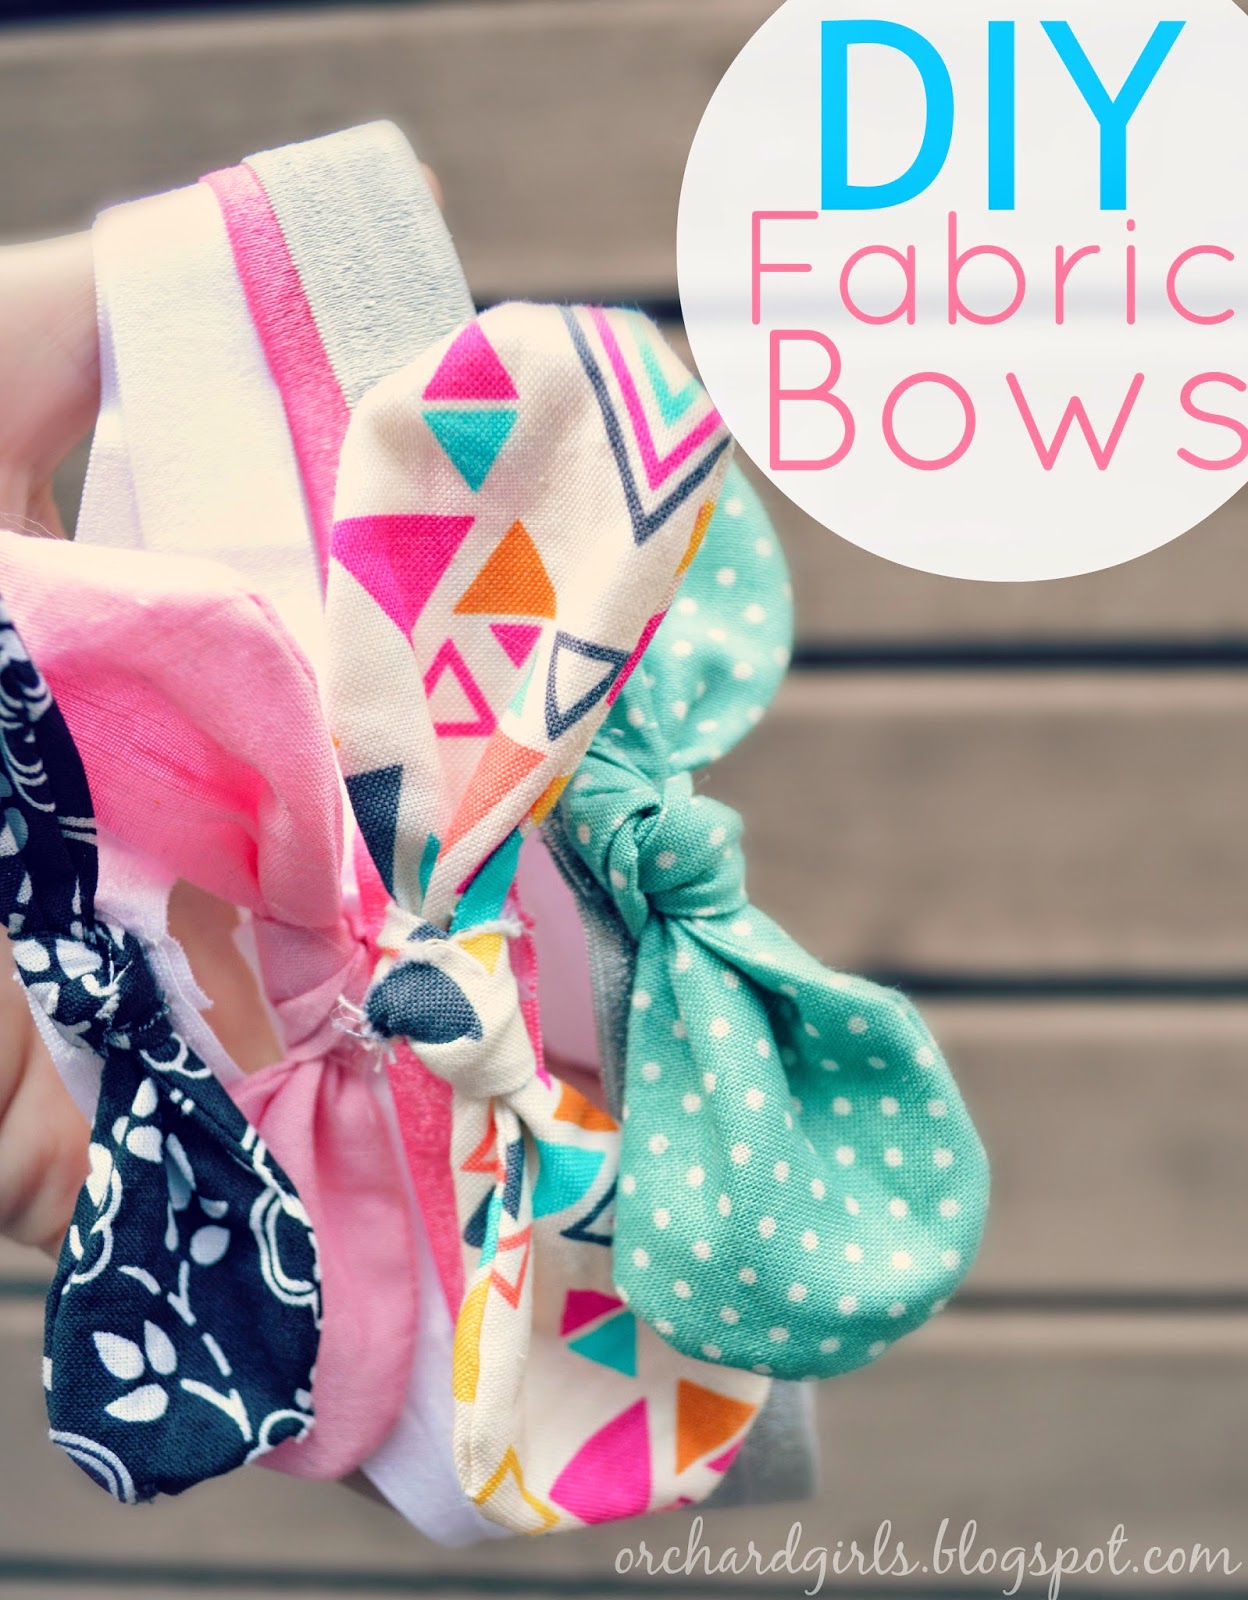 DIY Fabric Bows and headbands